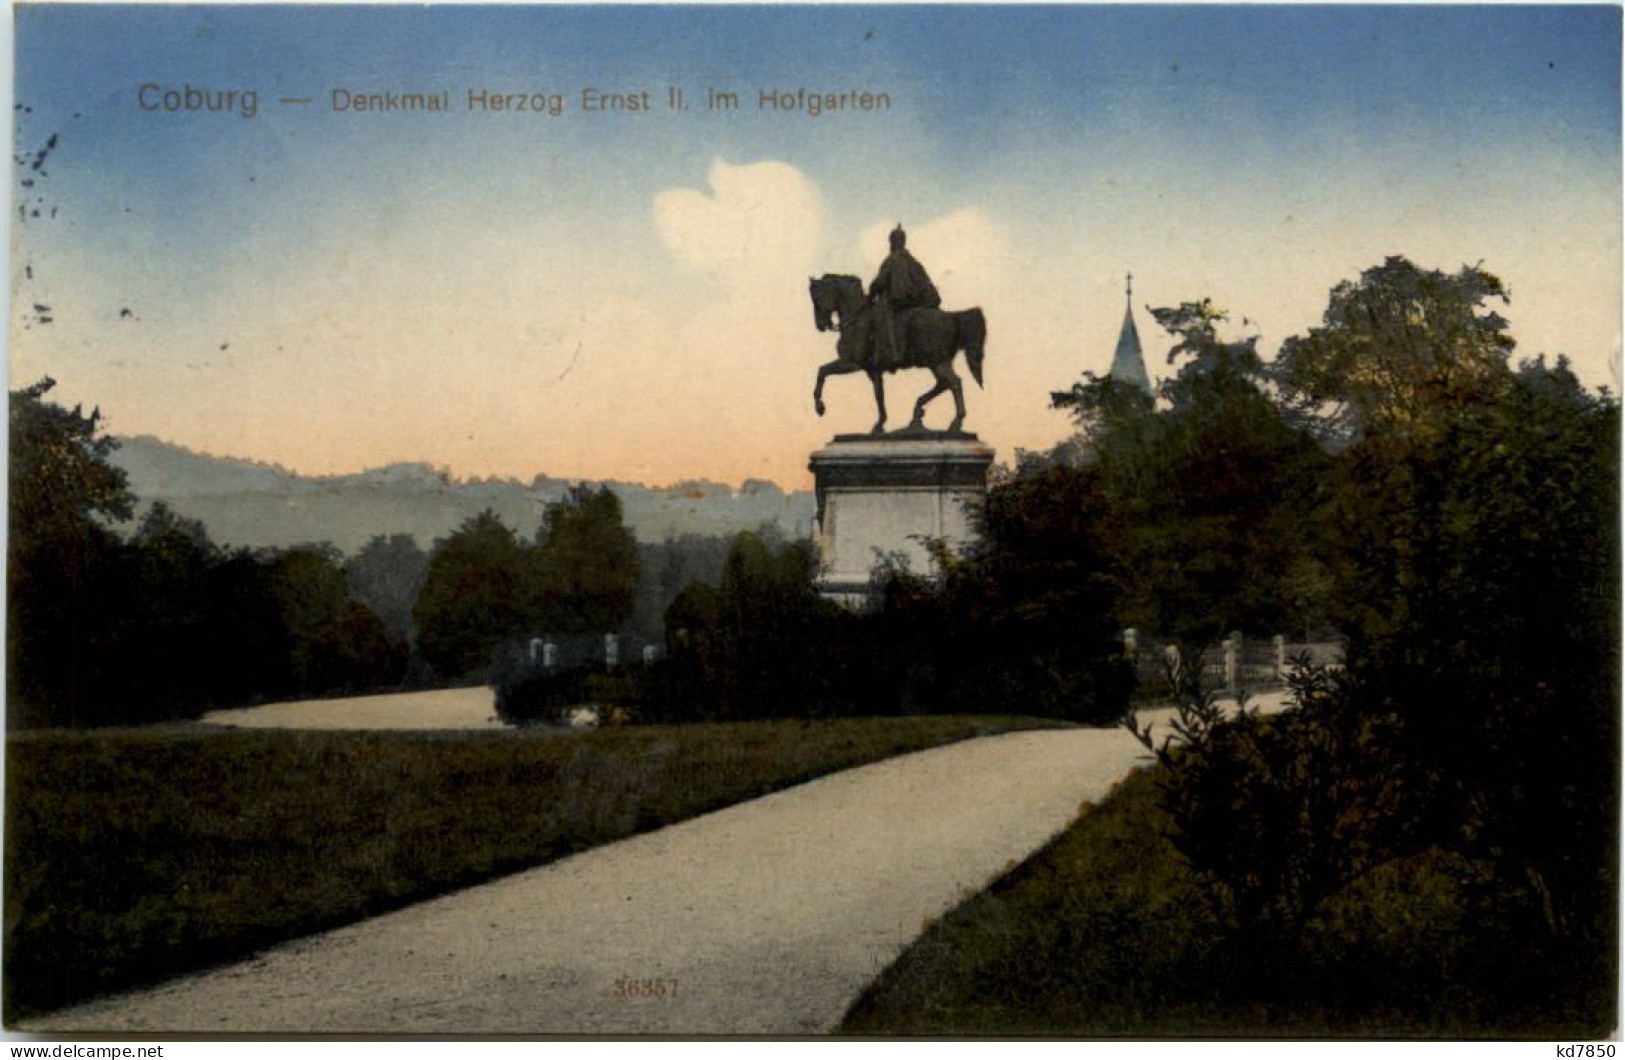 Coburg - Denkmal Herzog Ernst I - Coburg